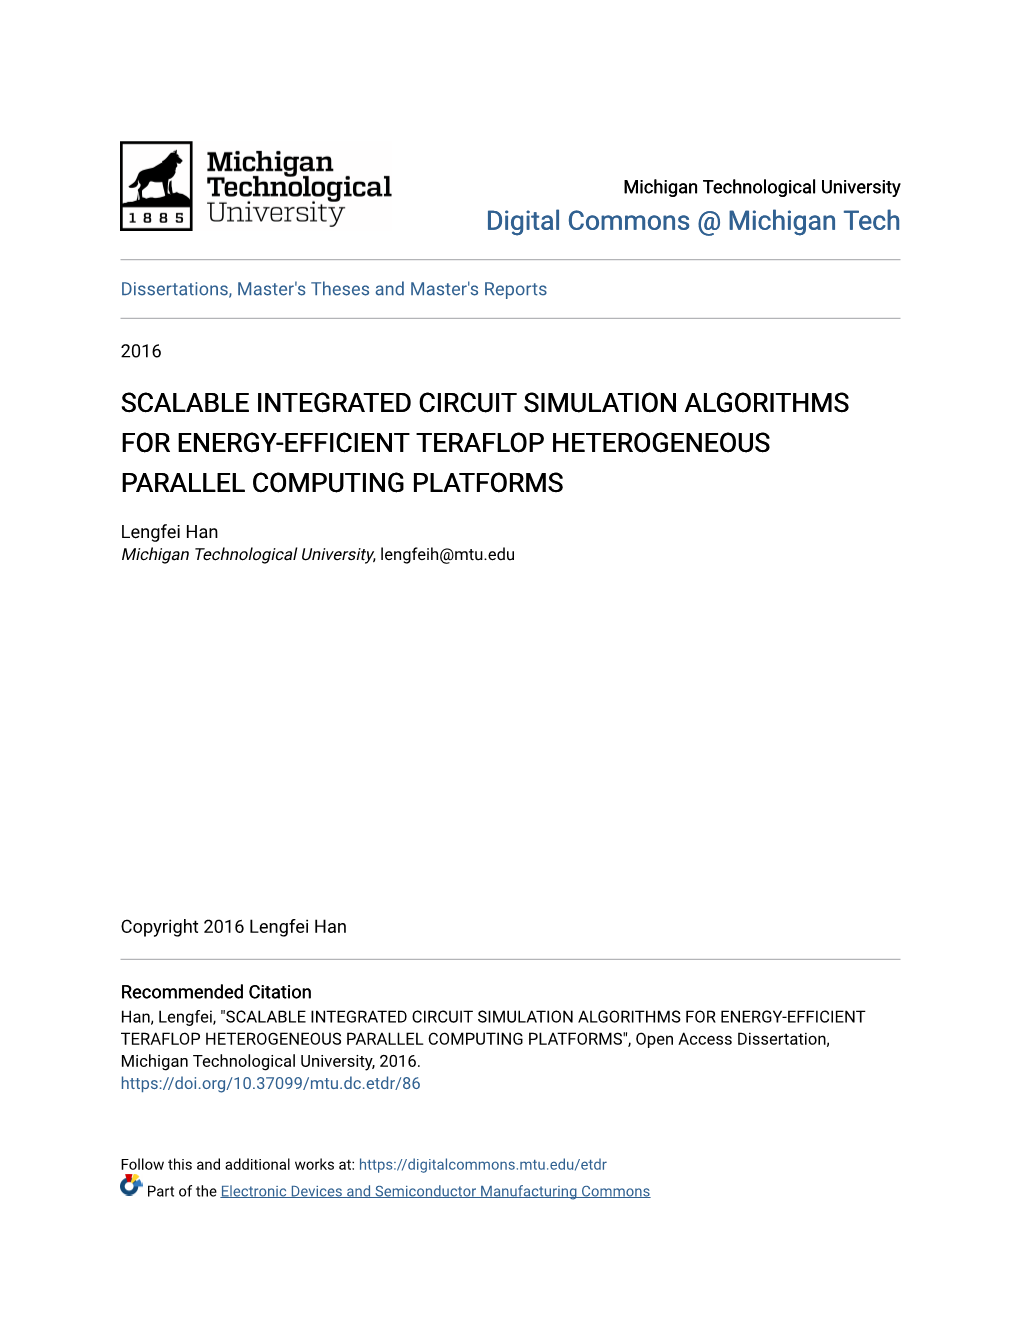 Scalable Integrated Circuit Simulation Algorithms for Energy-Efficient Teraflop Heterogeneous Parallel Computing Platforms